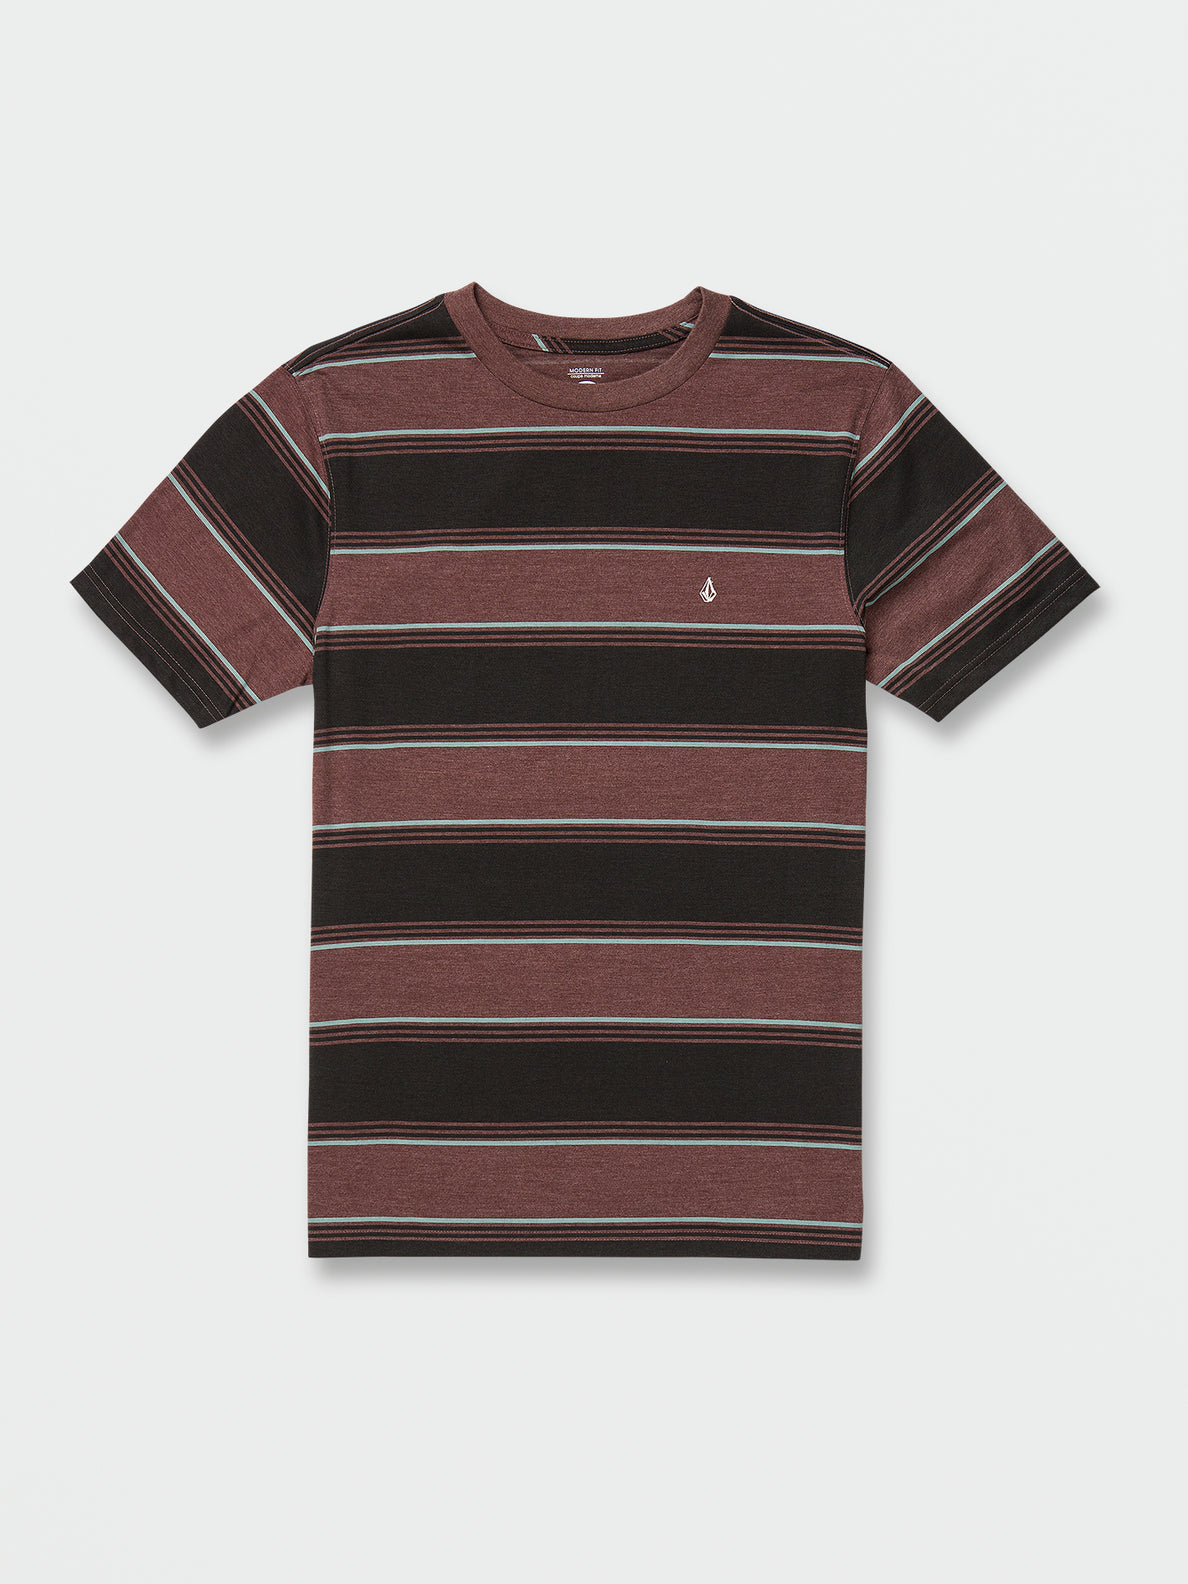 Bandstone Crew Short Sleeve Shirt - Mahogany (A0142203_MAH) [F]